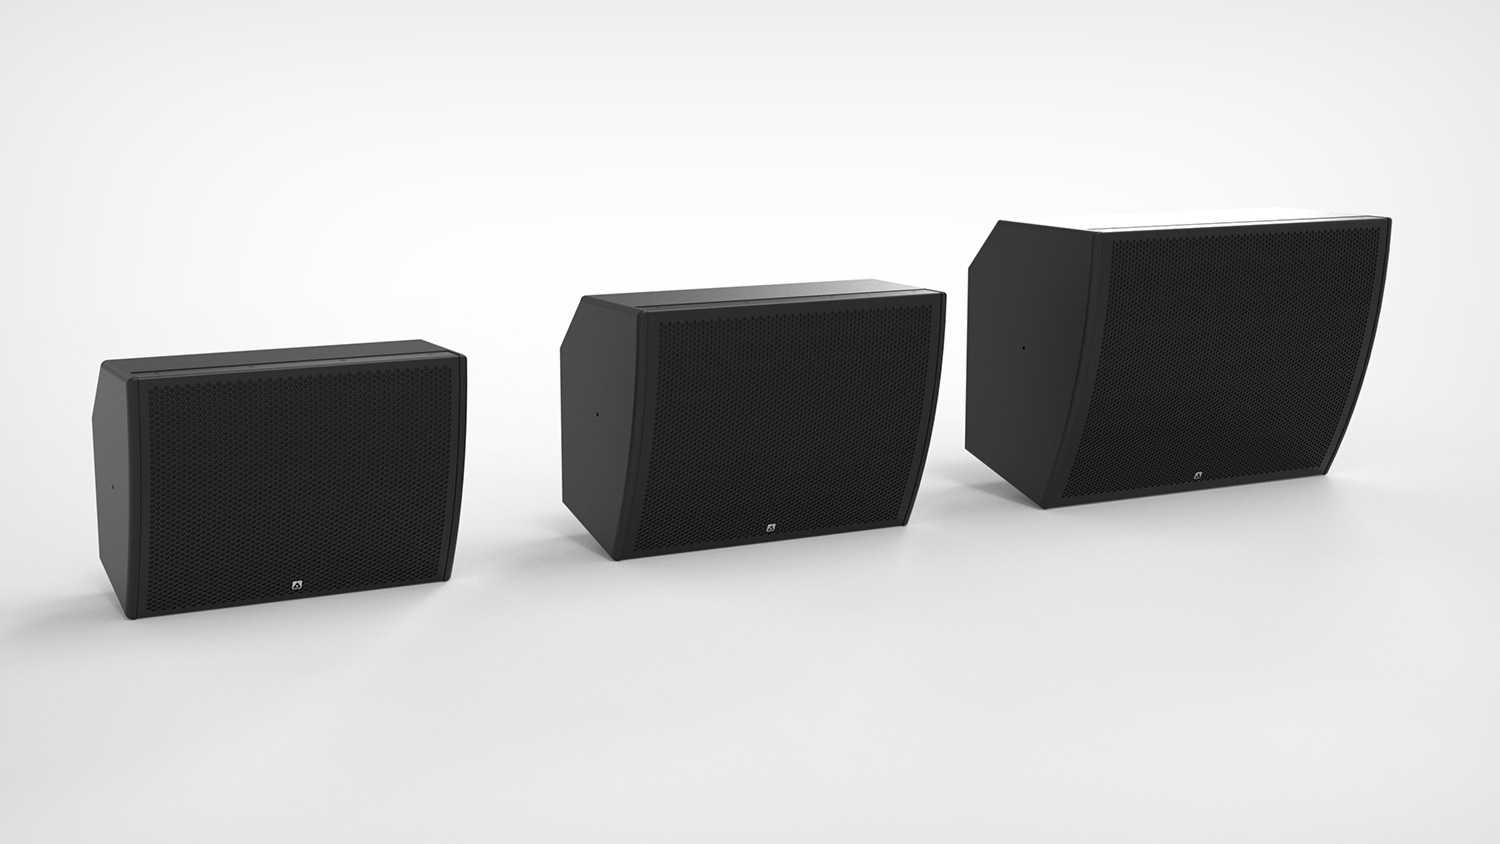 The new Pan Speaker CX series: P 8-CX, P 10-CX and P 12-CX